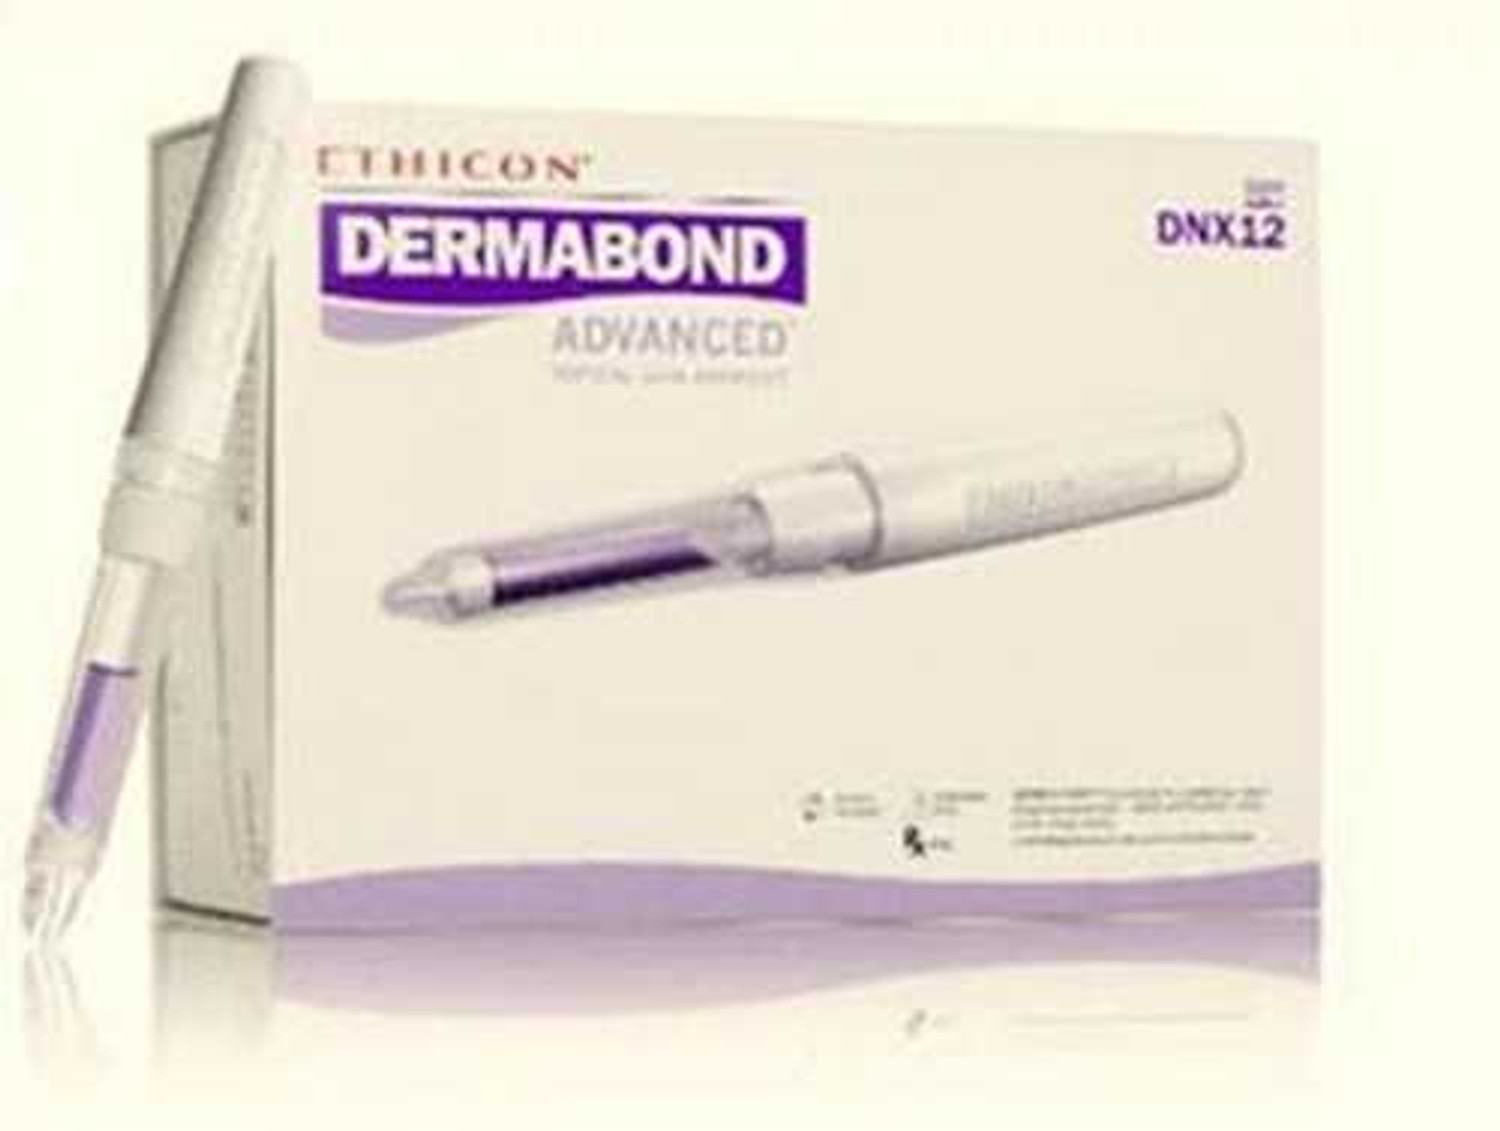 Buy EthiconDERMABOND Mini Topical Skin Adhesive, DHVM12, 0.36 mL